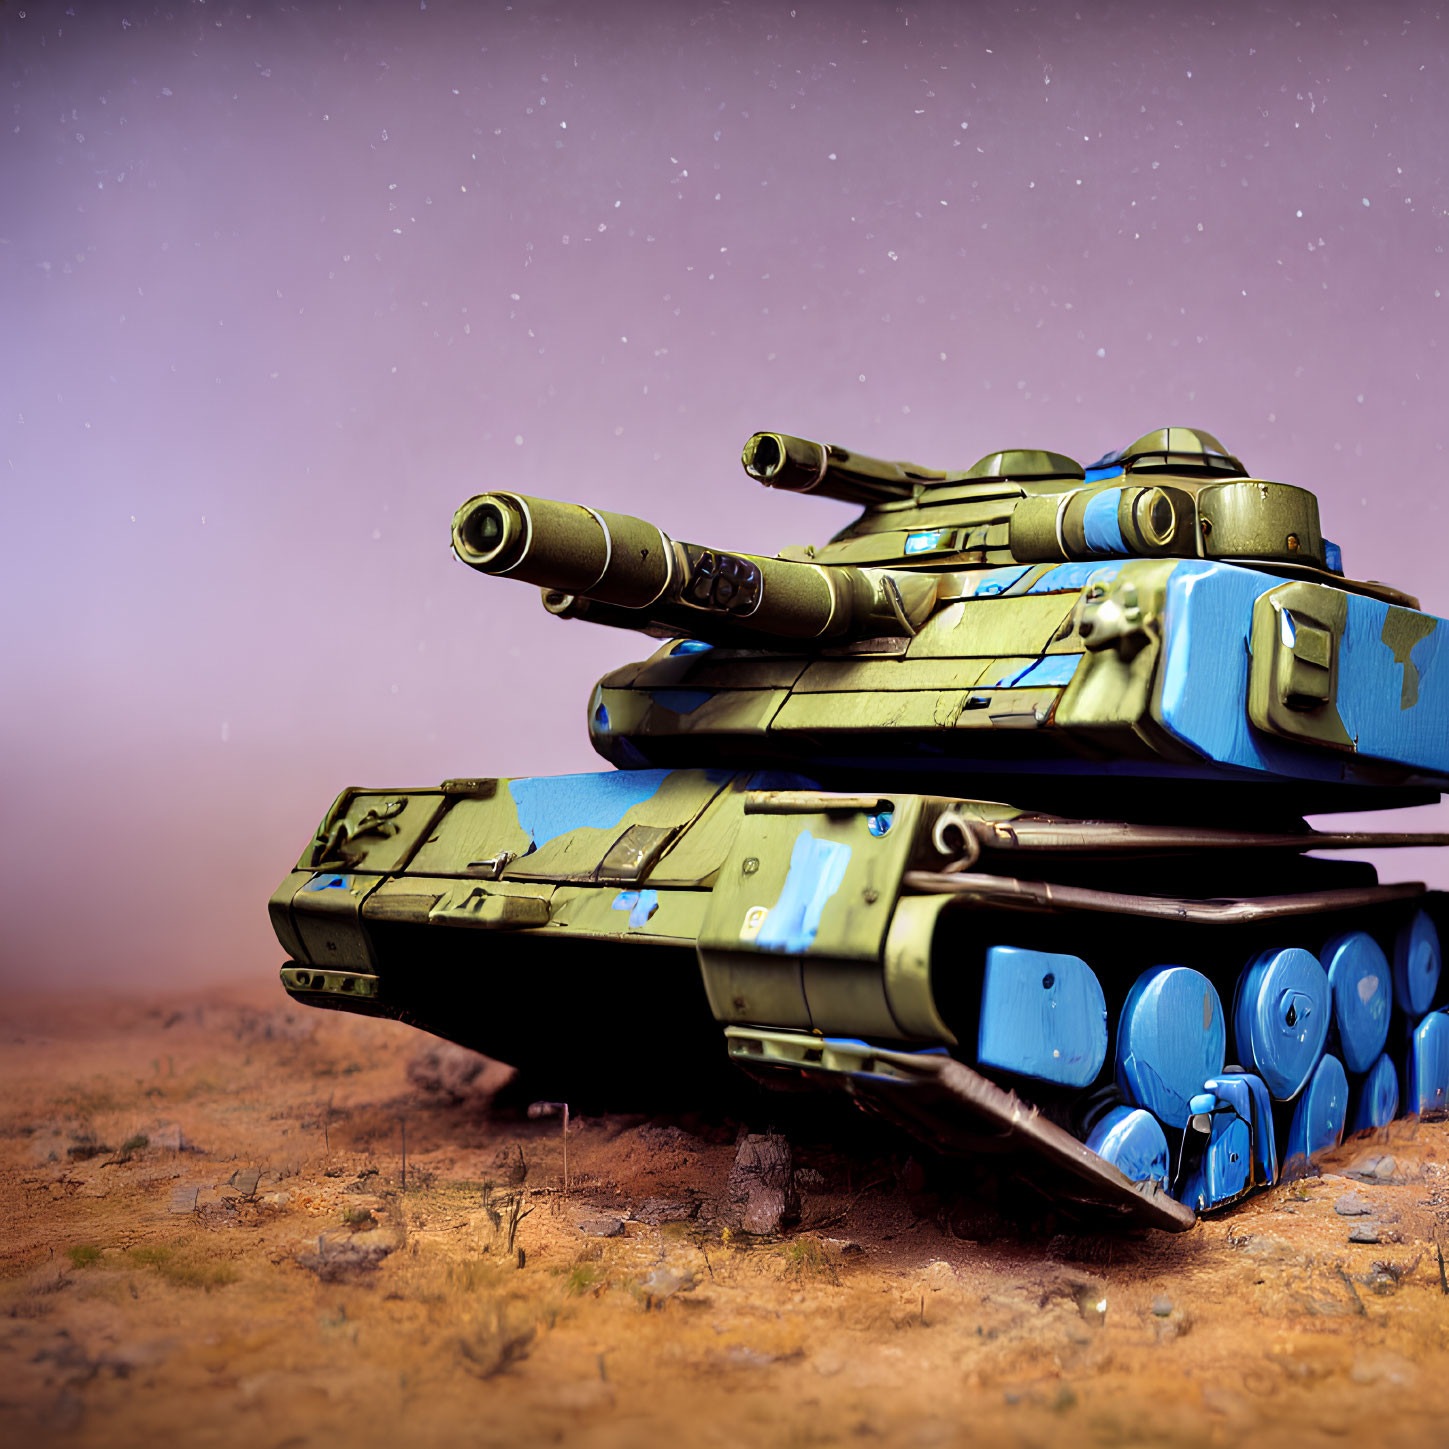 Futuristic dual-barreled tank on rocky terrain under starry sky